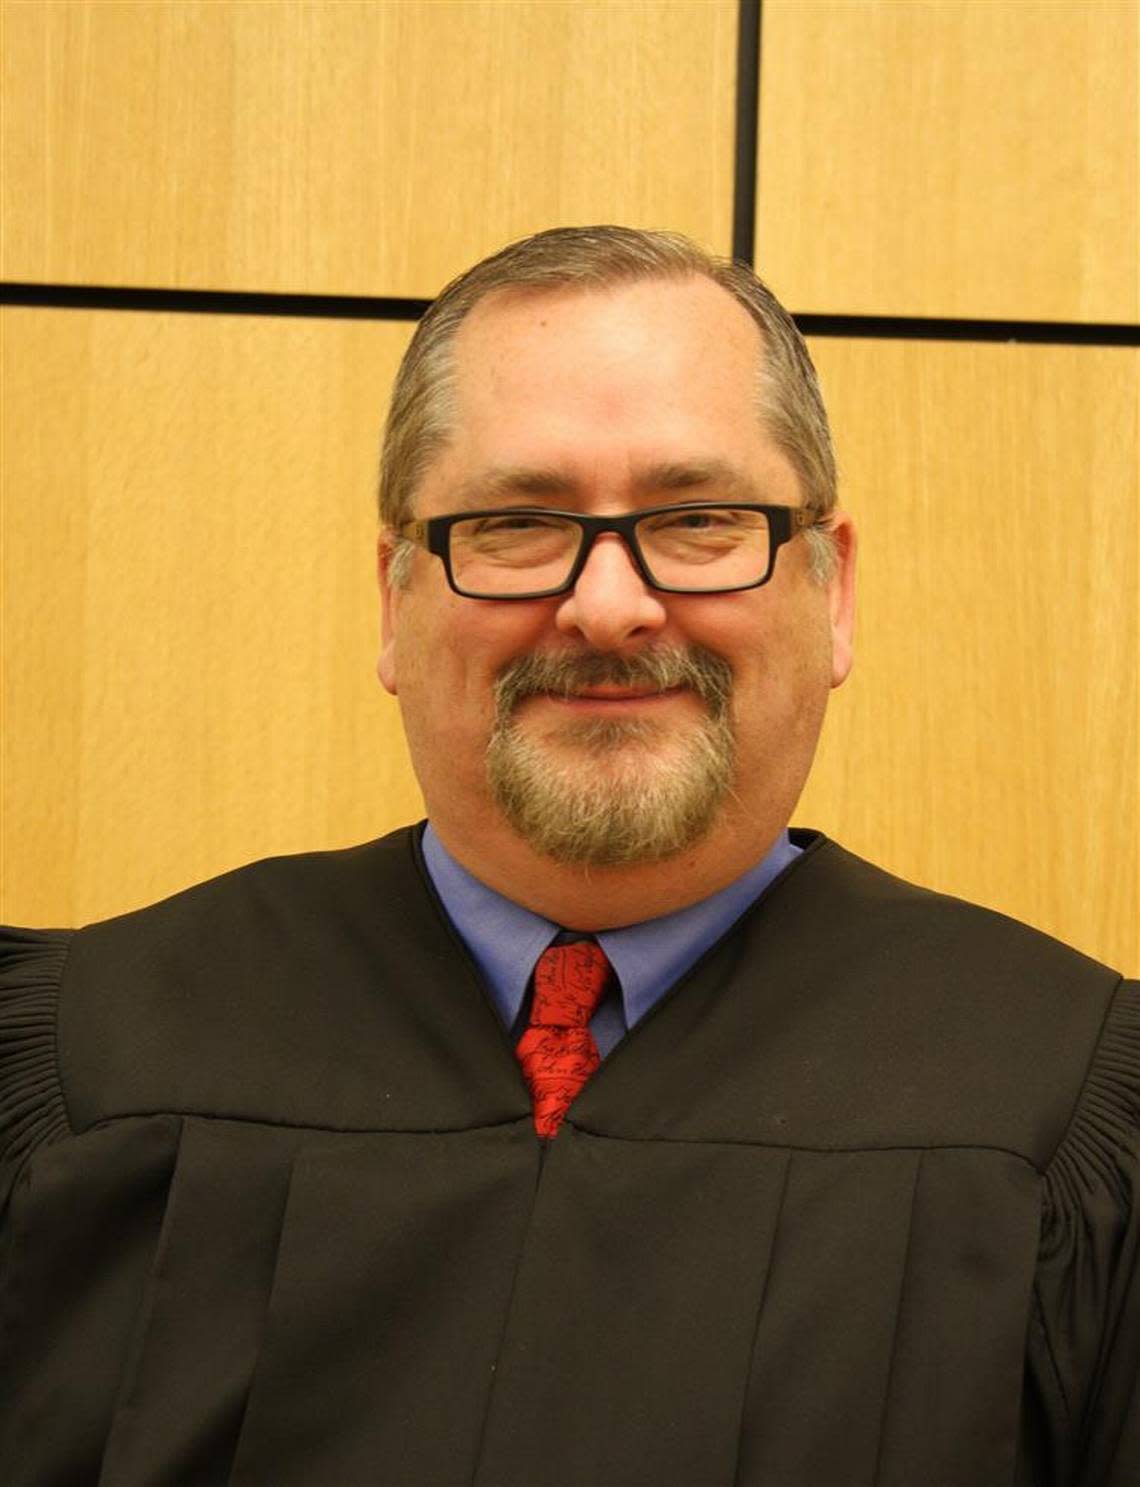 Benton County District Court Judge Terry Tanner